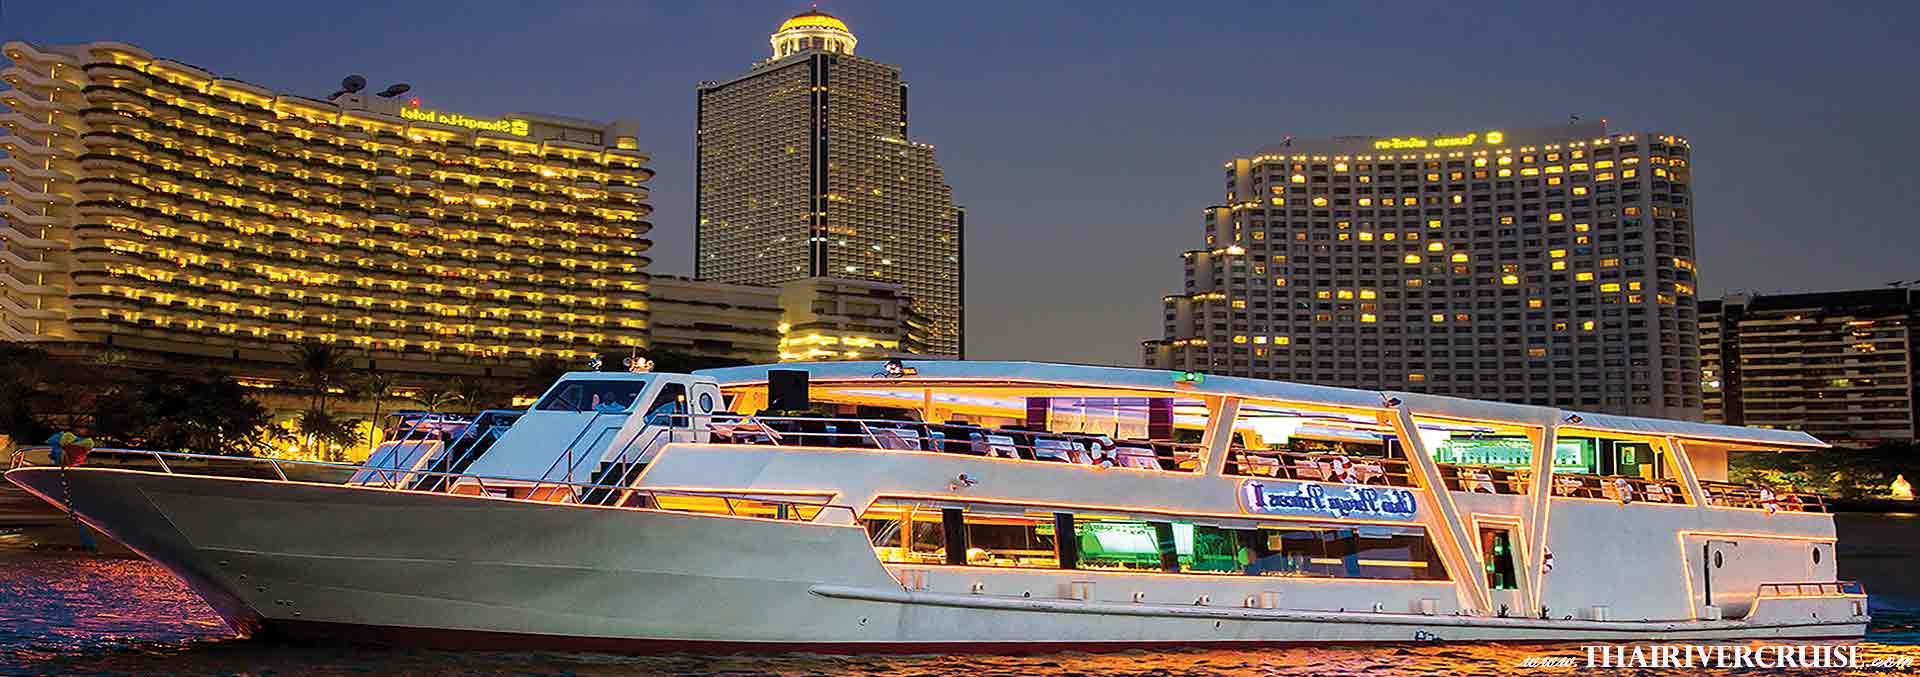 Chao Phraya Princess Cruise Bangkok Dinner Cruise ฺPromotion Discount Cheap Ticket Price Offers